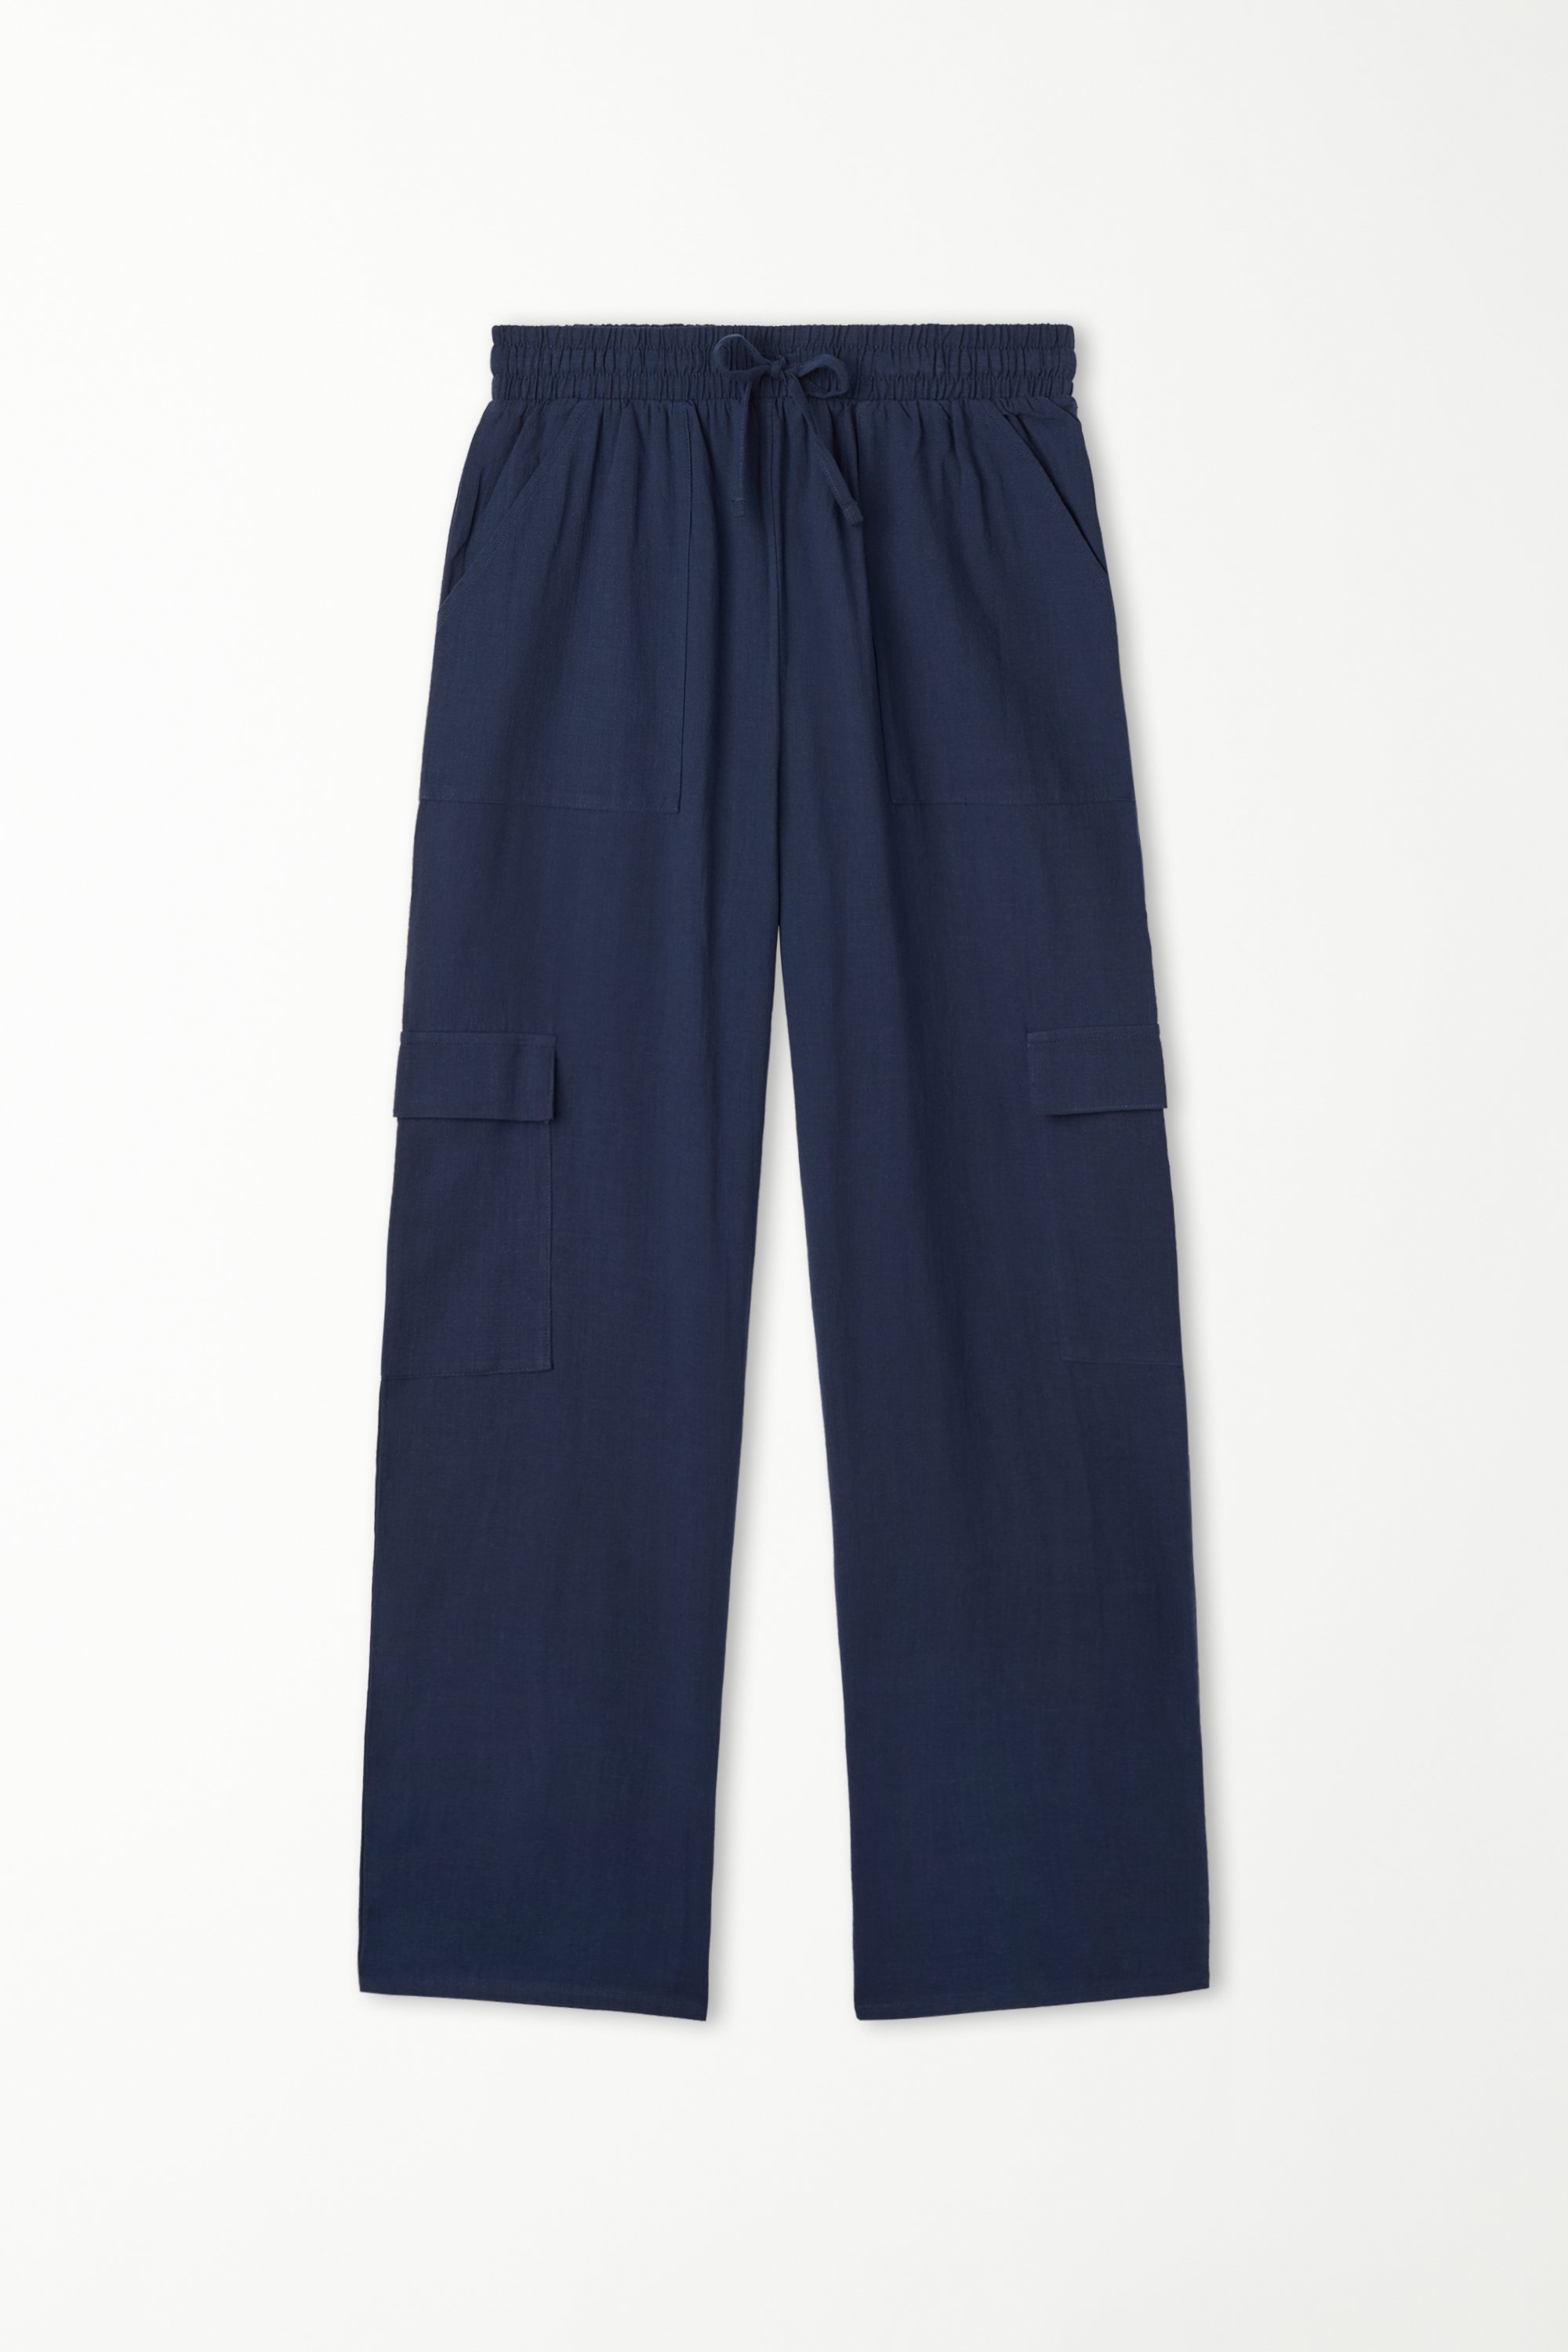 Pantalon 100 % Coton Ultra-léger avec Poches